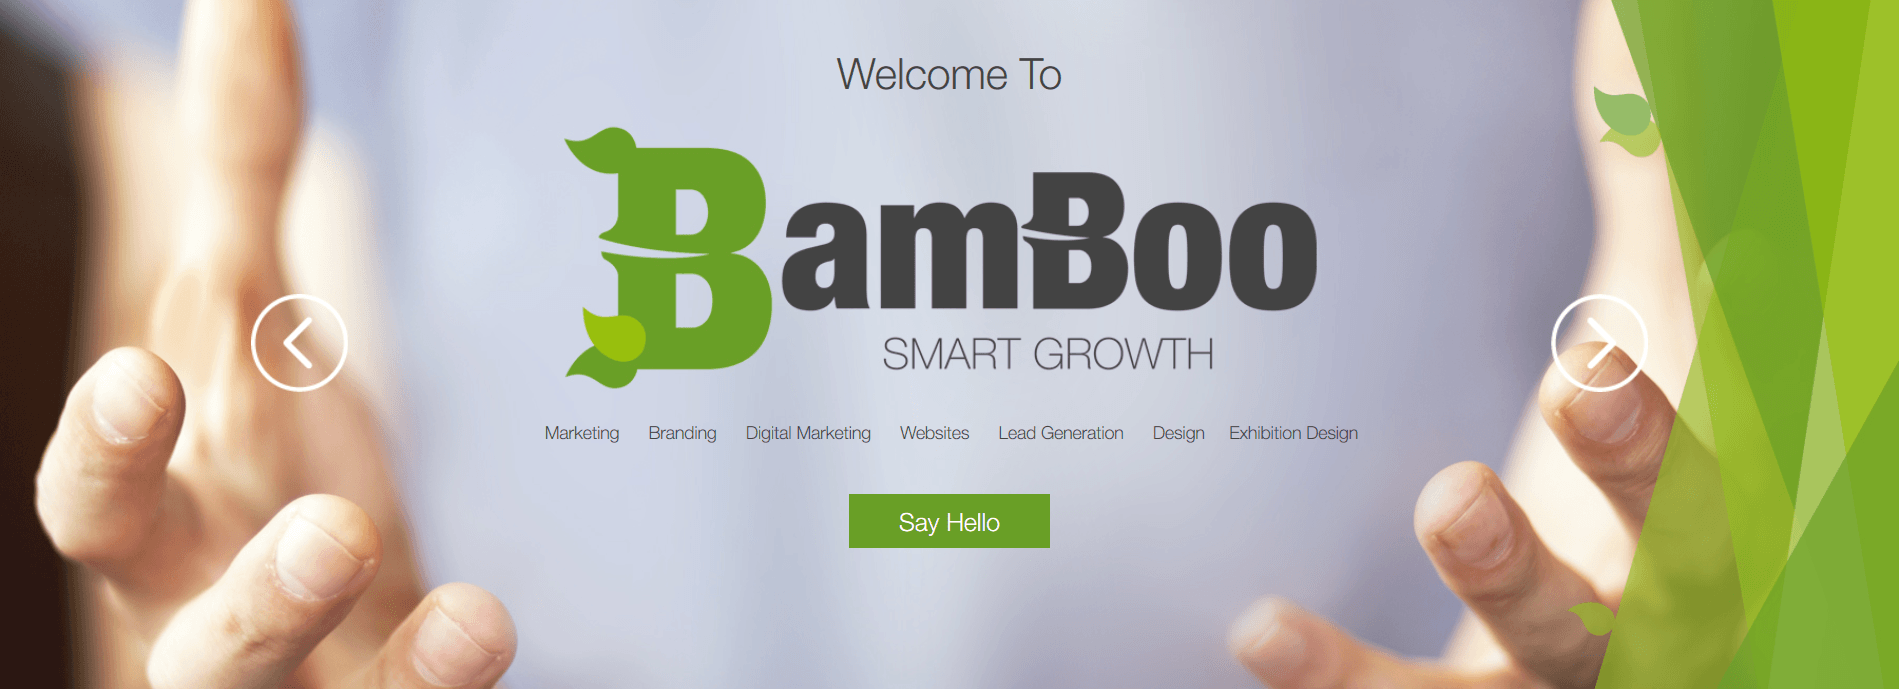 Bamboo Money Logo - BamBoo Smart Growth - Meet the BamBoo man